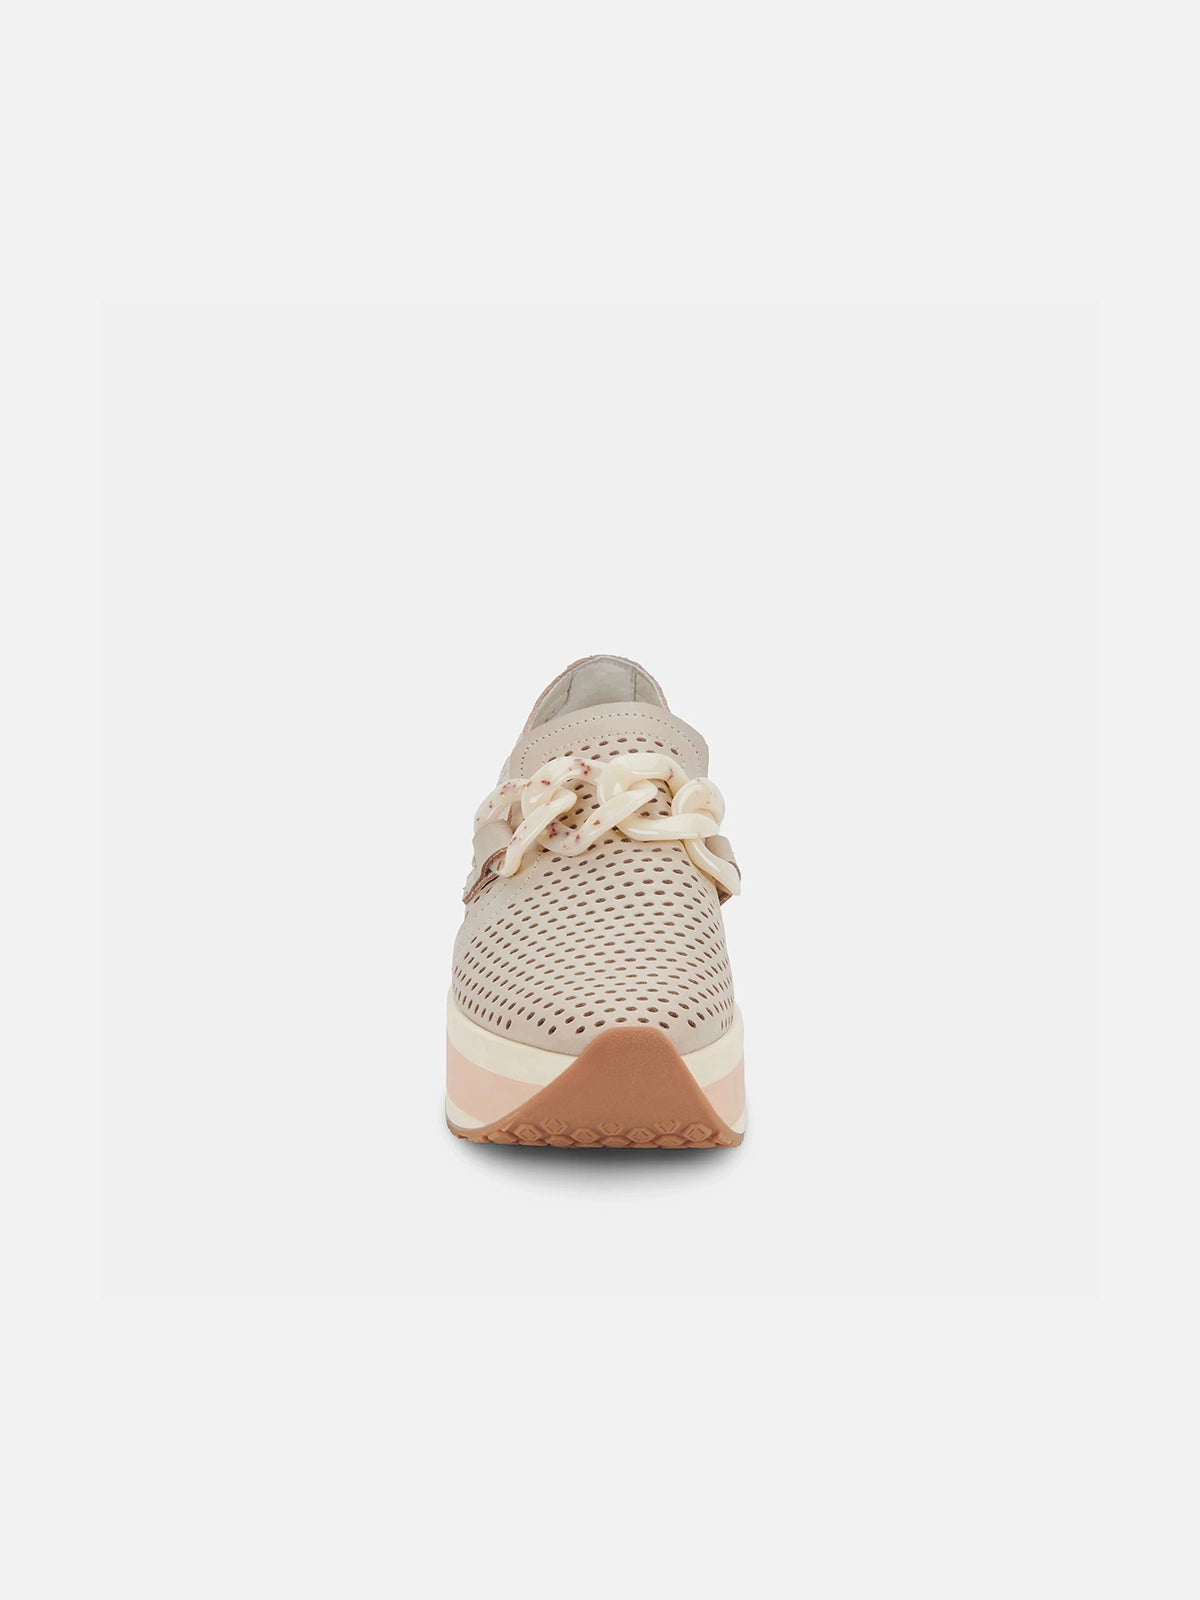 dolce vita jhenee perforated sneakers in sand nubuck